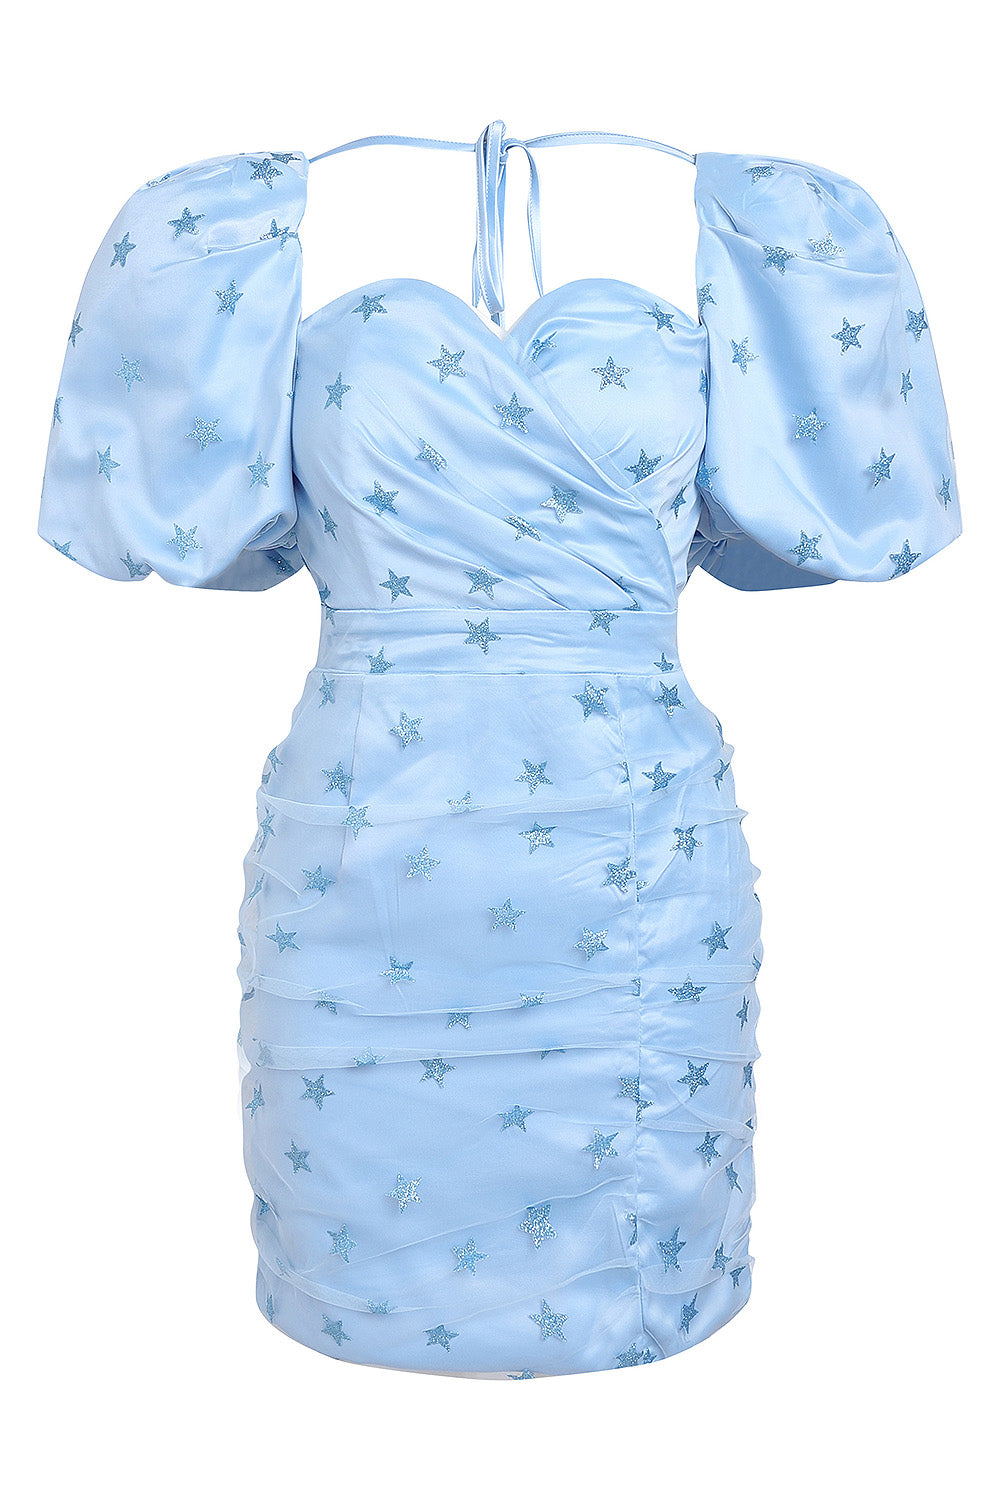 Sky-Blue Backless Puff-Sleeve Midi Dress - ELAGIA